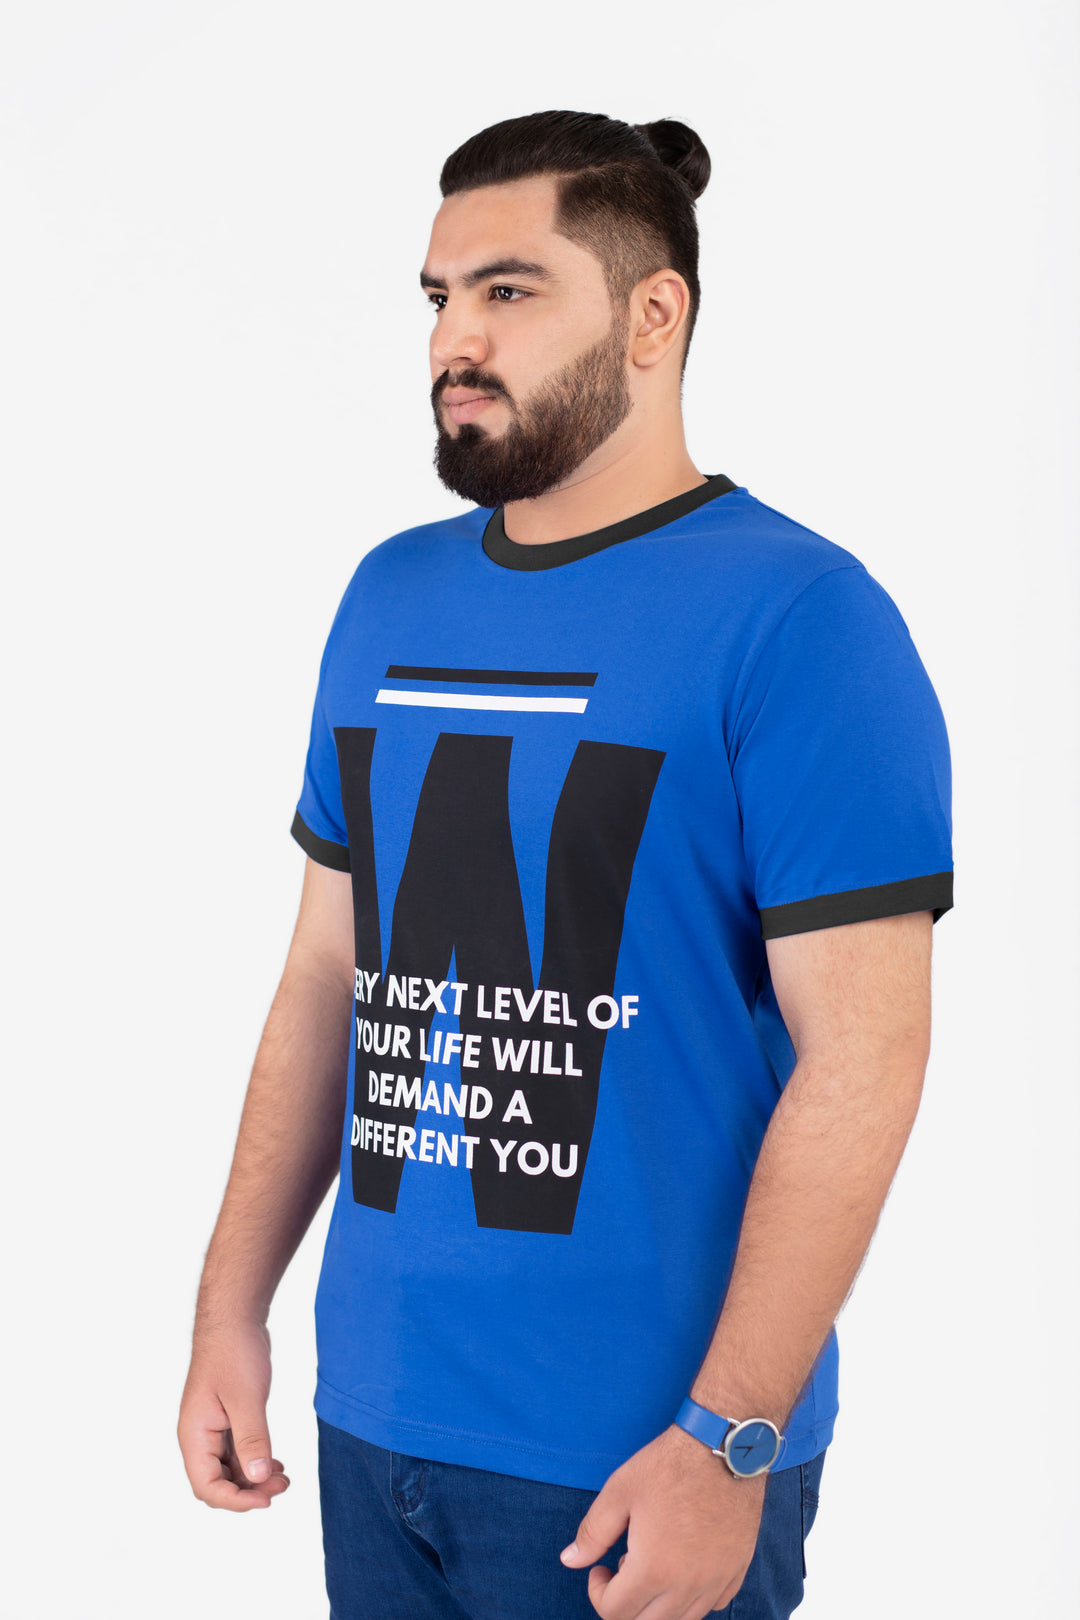 Plus Size Motivational T-Shirts in Pakistan.